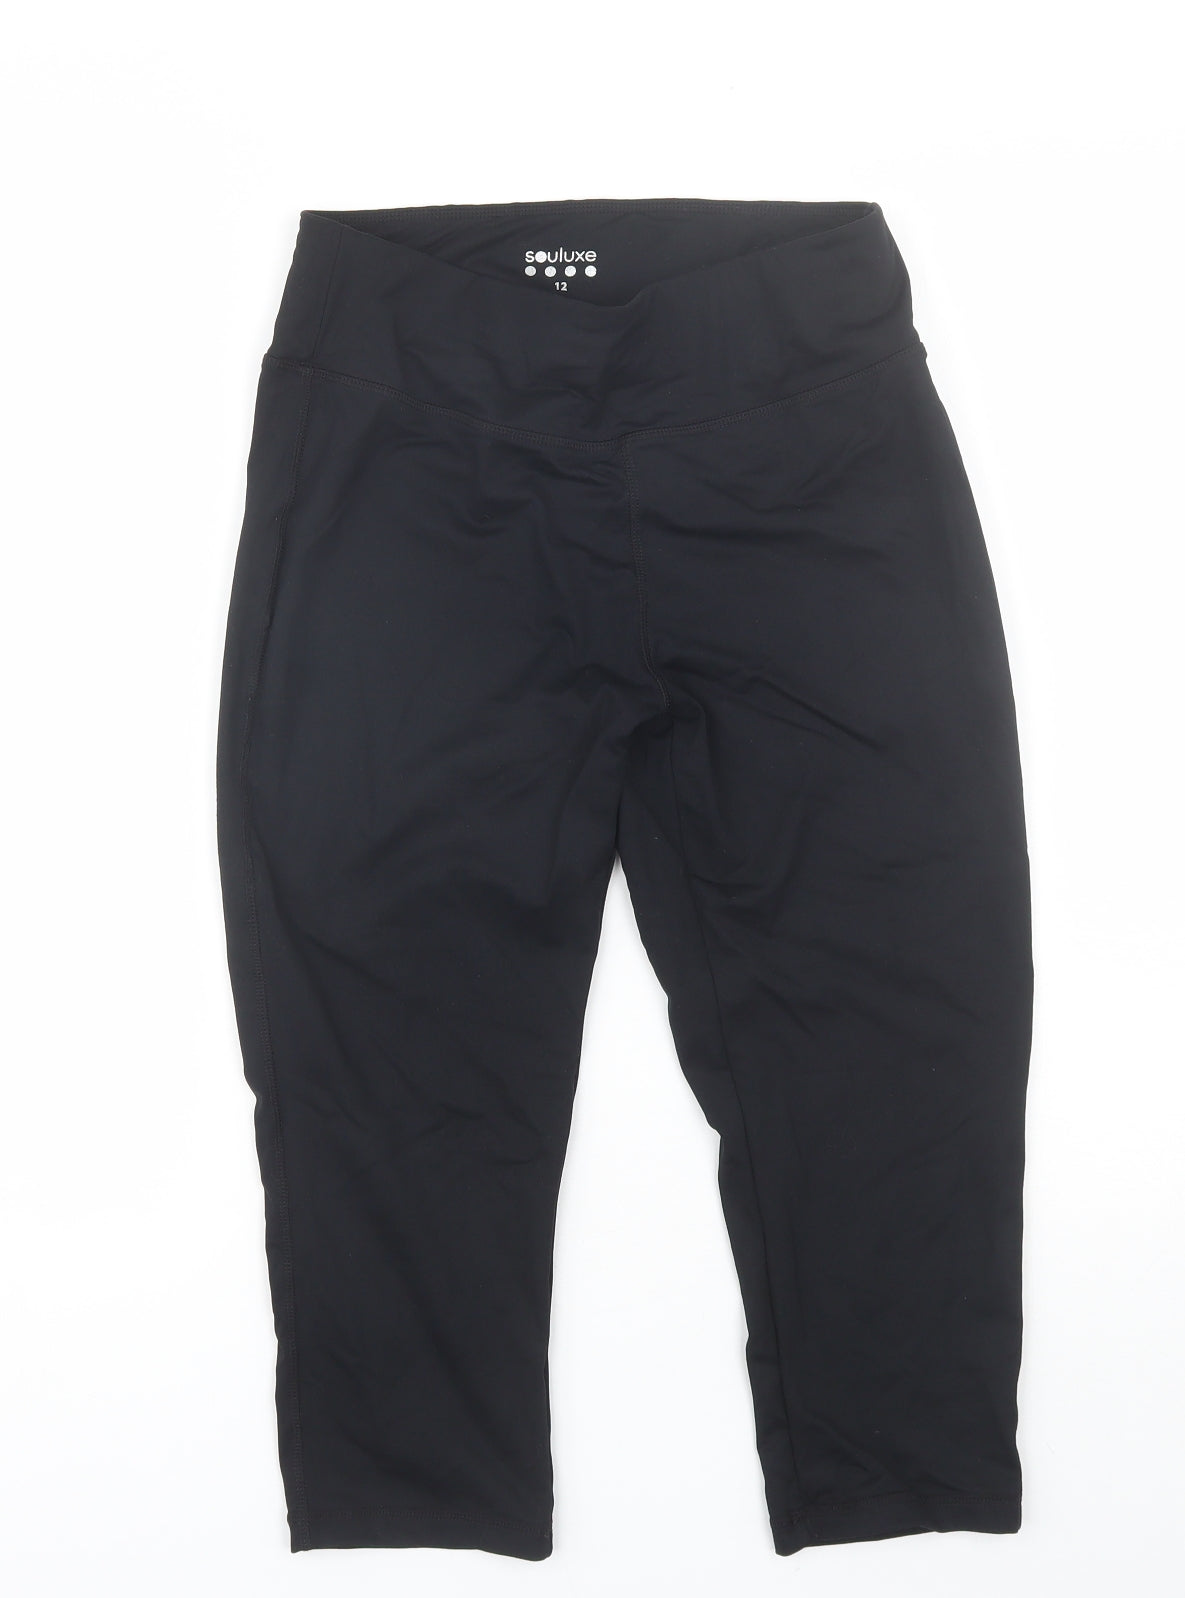 Souluxe Womens Black Polyamide Compression Shorts Size 12 L18 in Regul –  Preworn Ltd